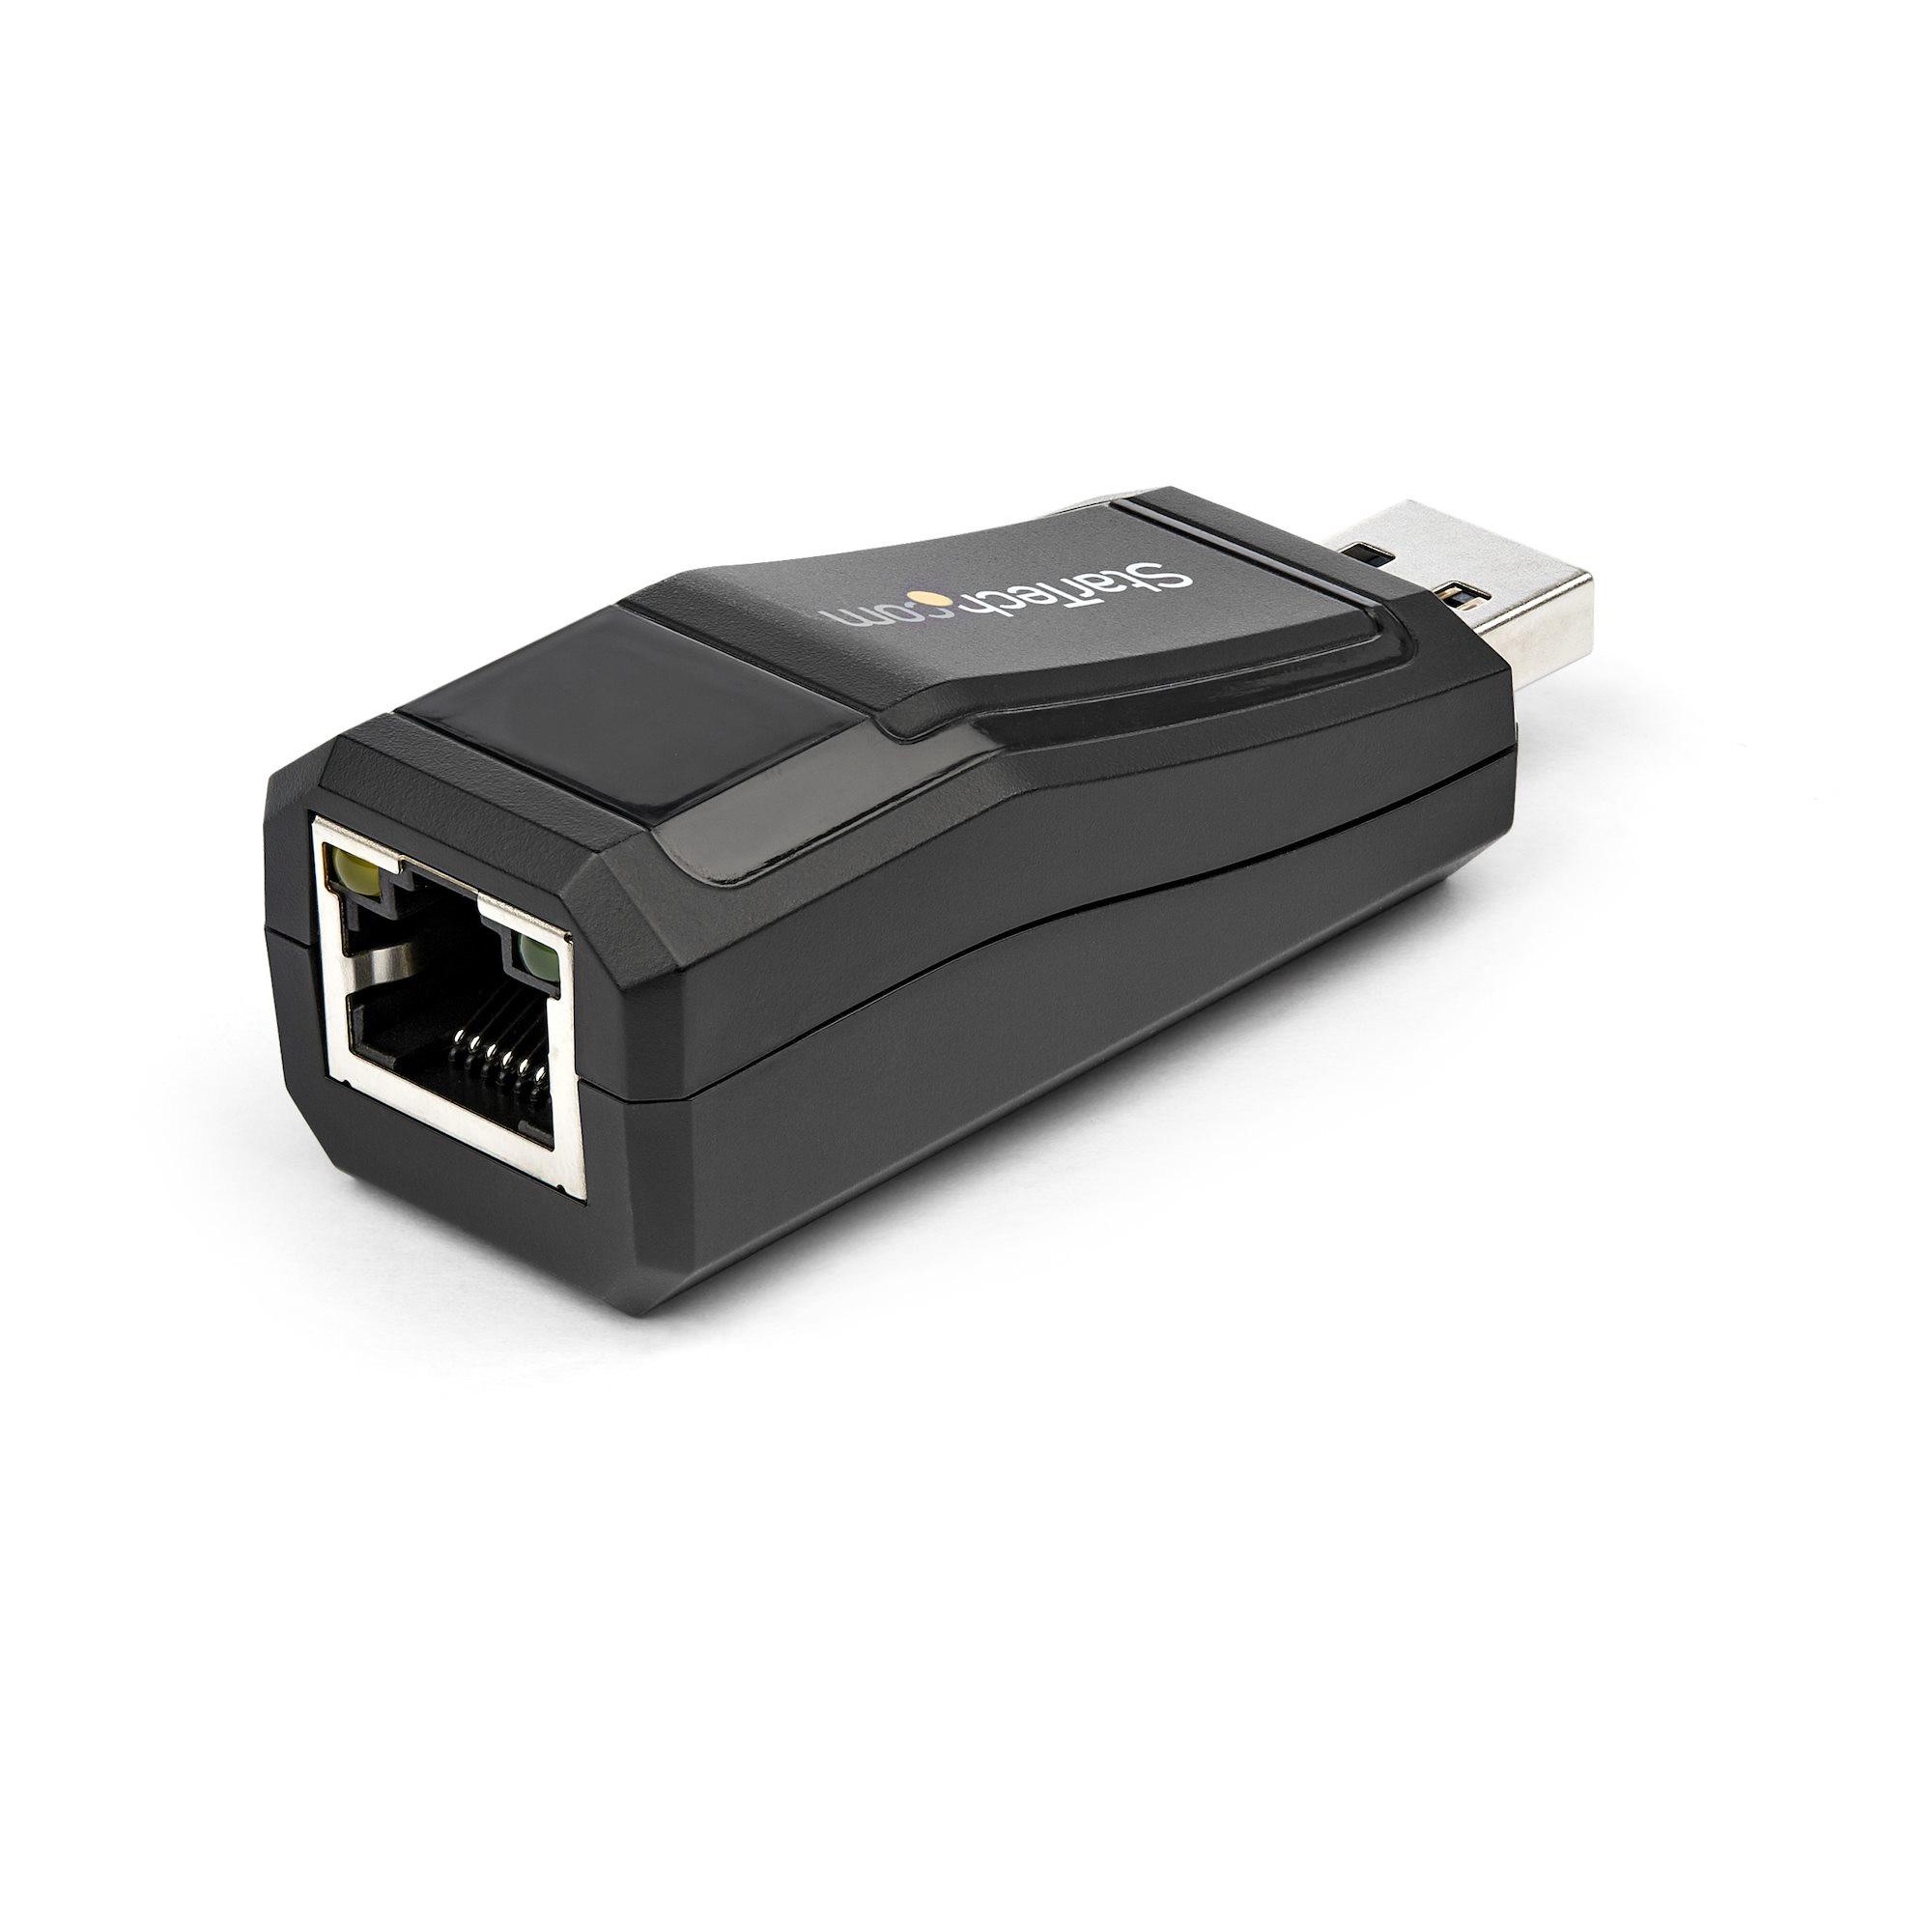 STARTECH  USB 3.0 TO GIGABIT NIC ADAPTER 